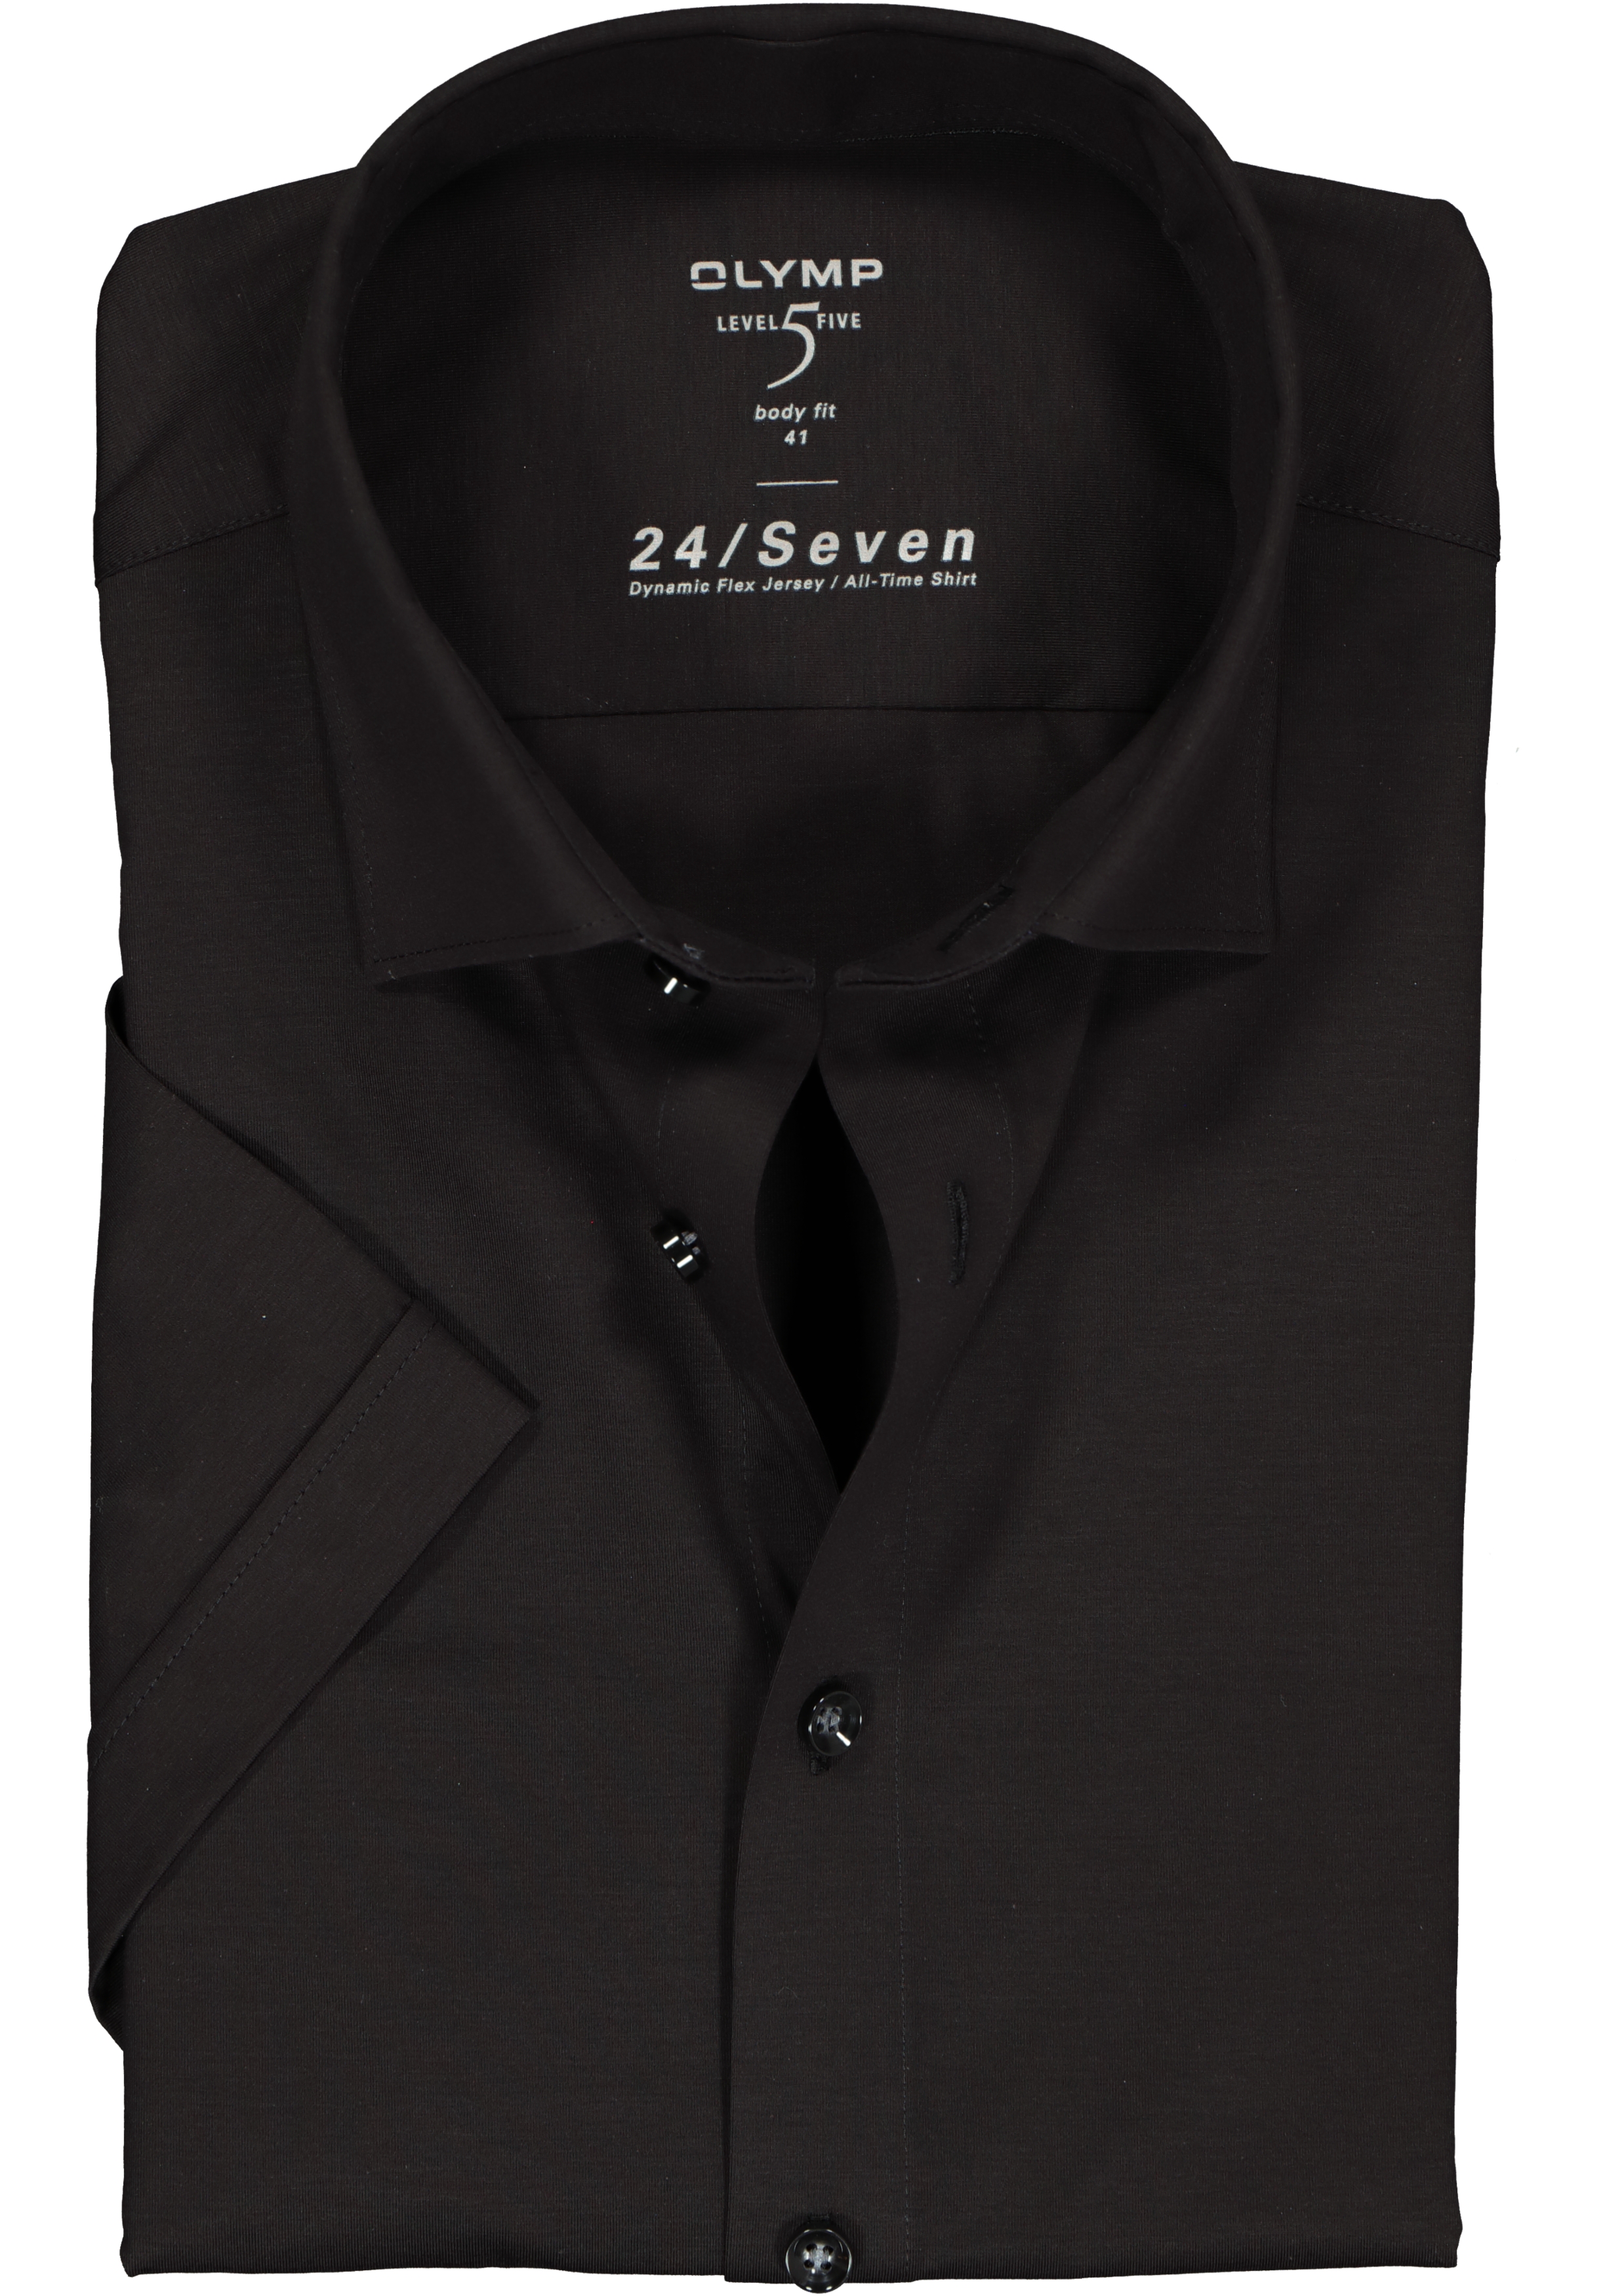 OLYMP Level 5 24/Seven body fit overhemd, korte mouw, zwart tricot